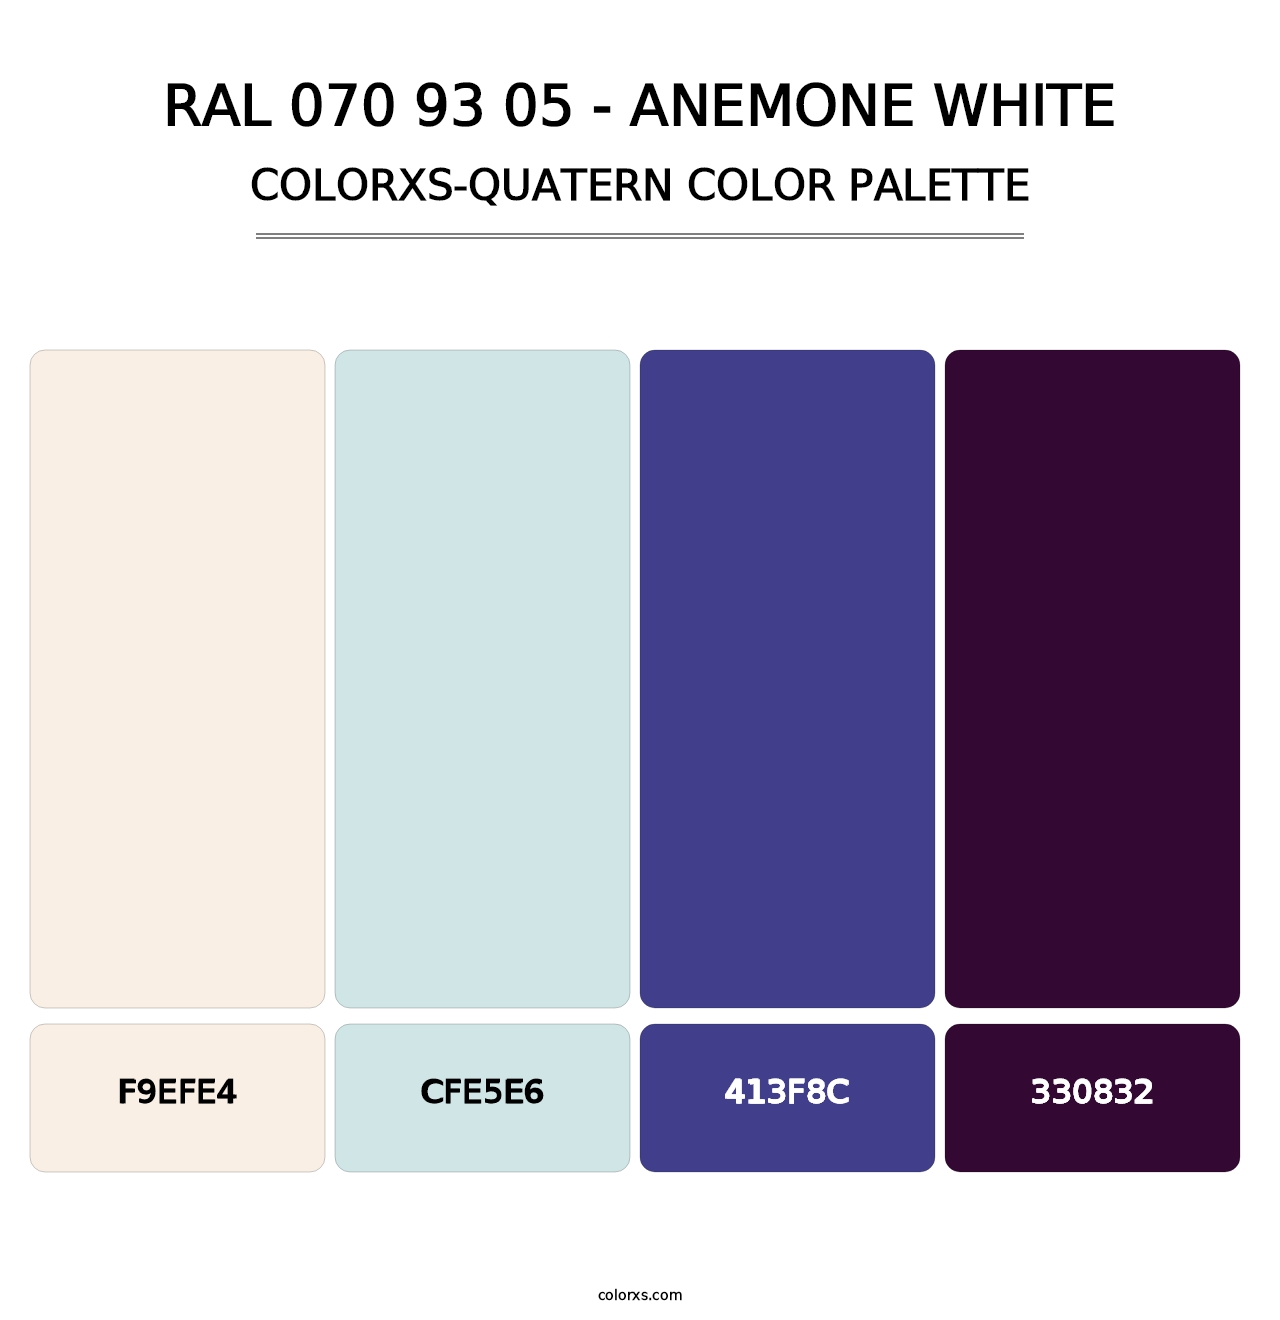 RAL 070 93 05 - Anemone White - Colorxs Quatern Palette